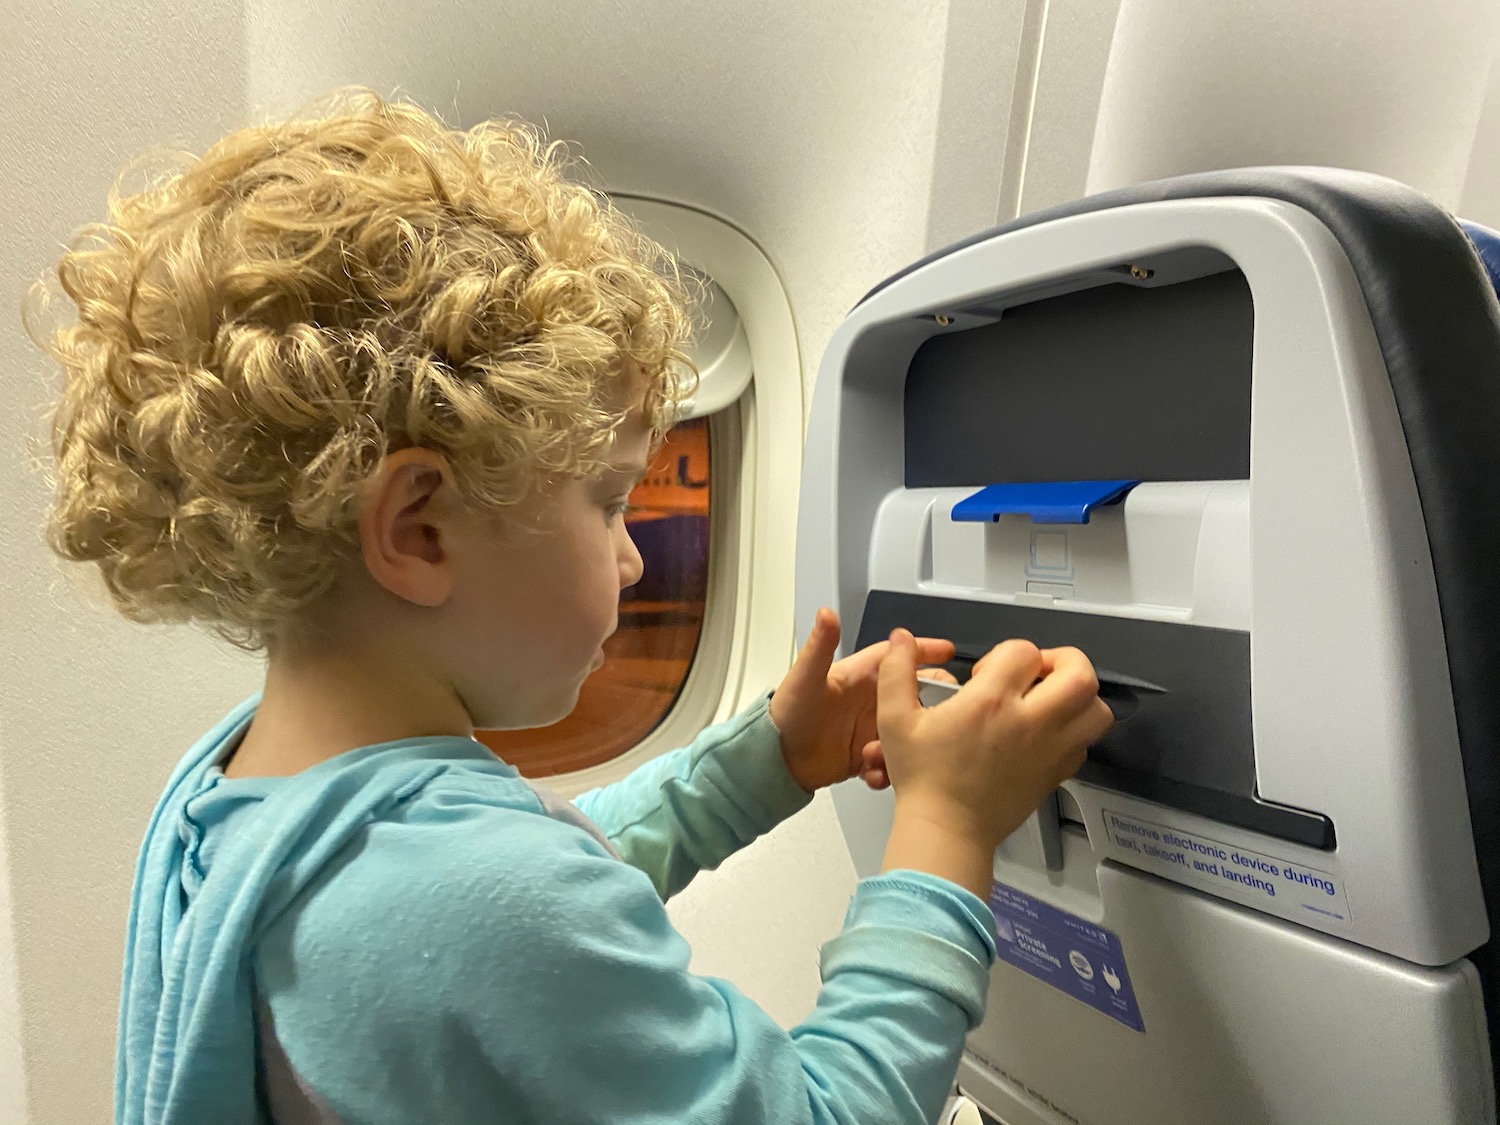 a child using a paper dispenser